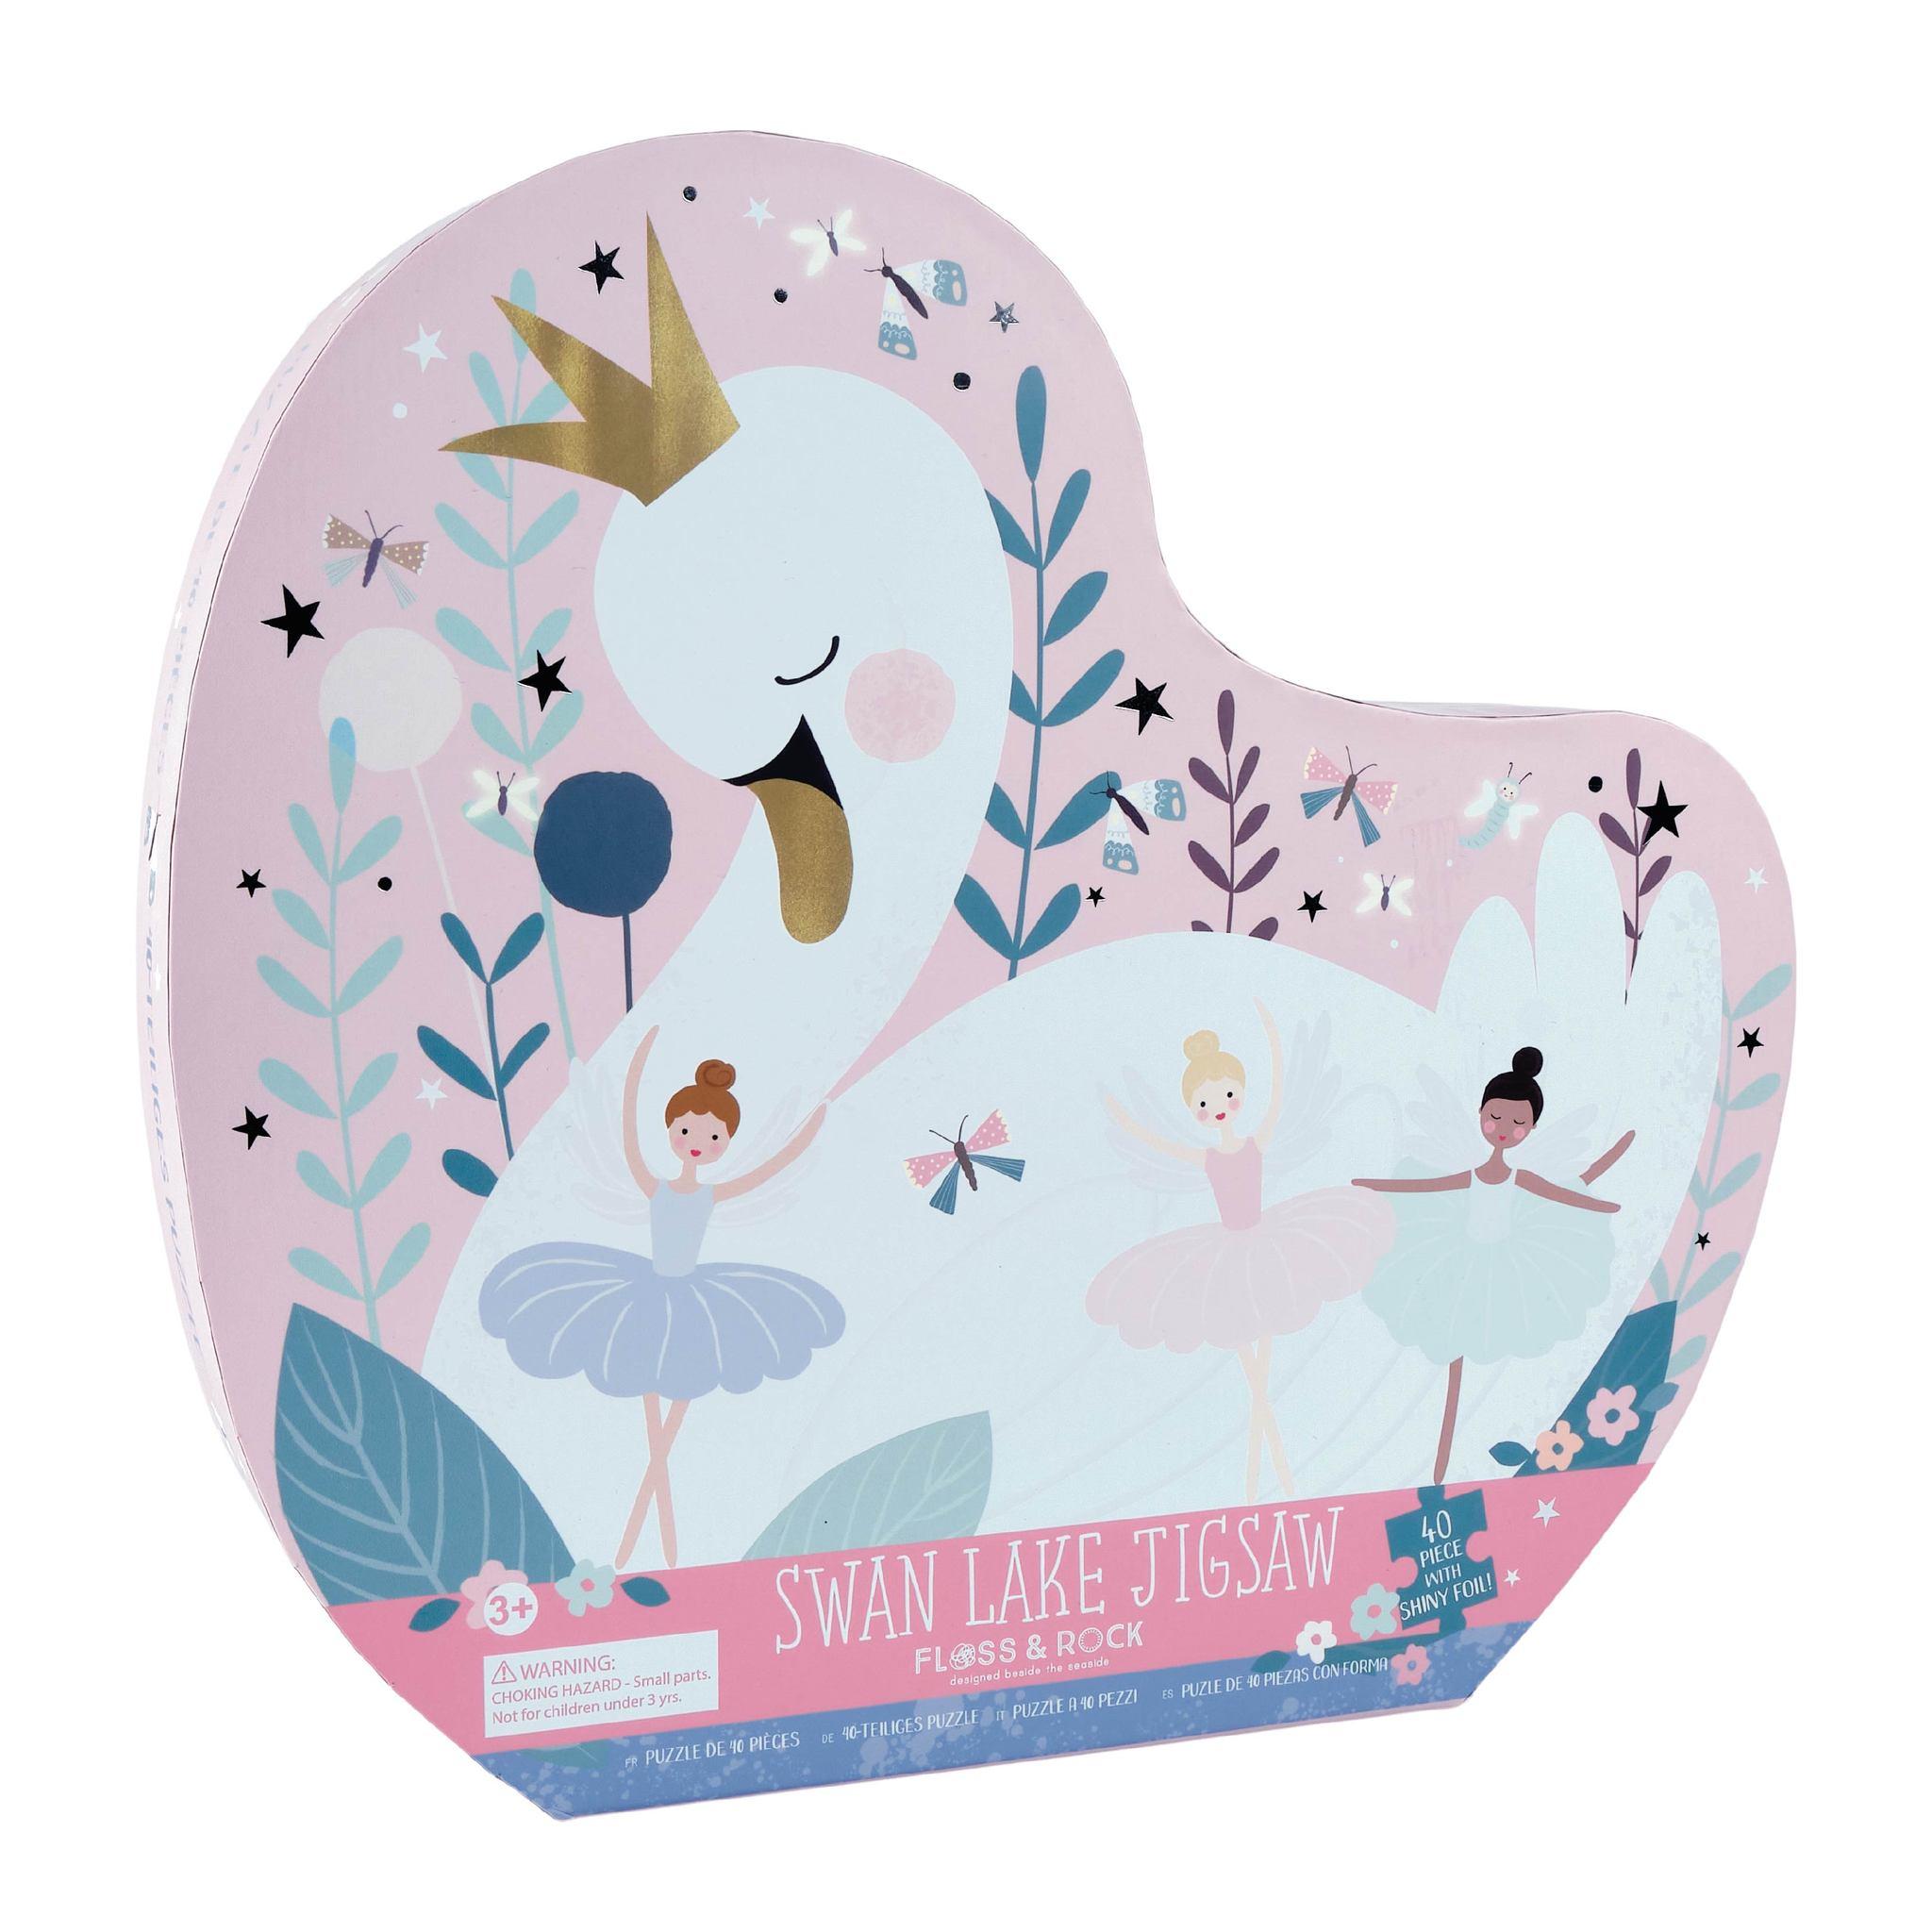 Swan-shaped box for a magical swan and fairy scene jigsaw.